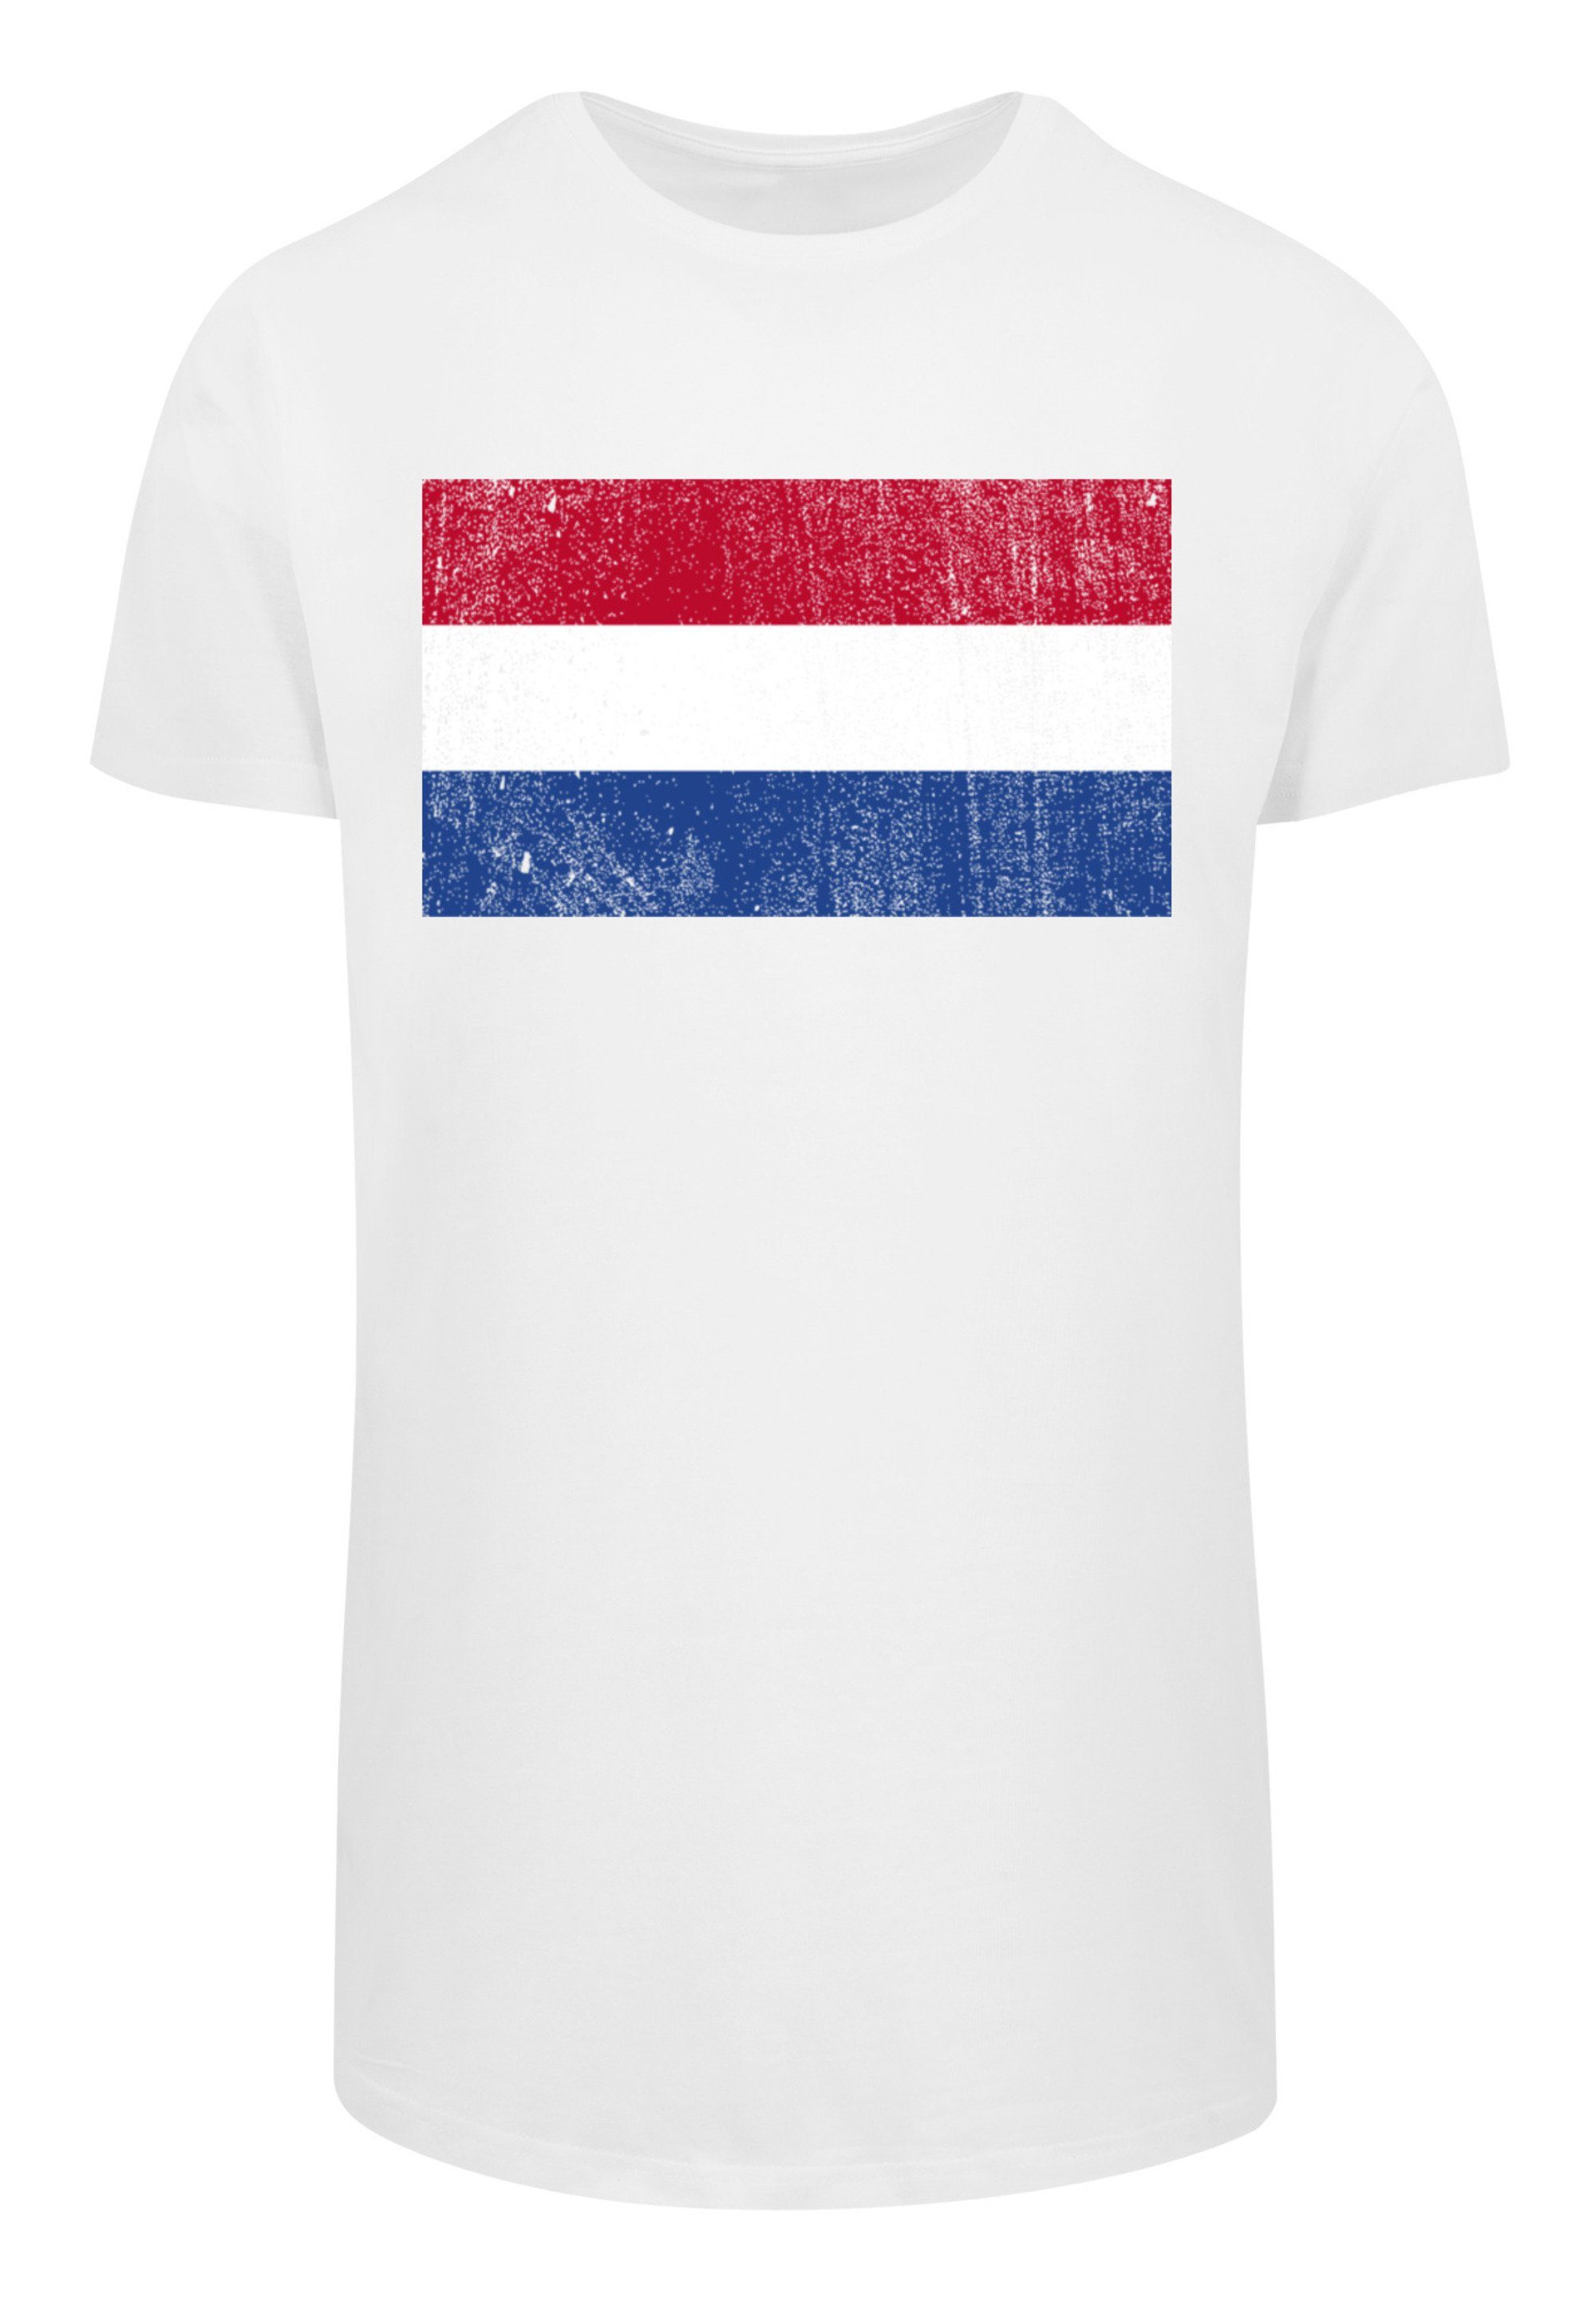 F4NT4STIC T-Shirt Print NIederlande Holland Flagge weiß distressed Netherlands